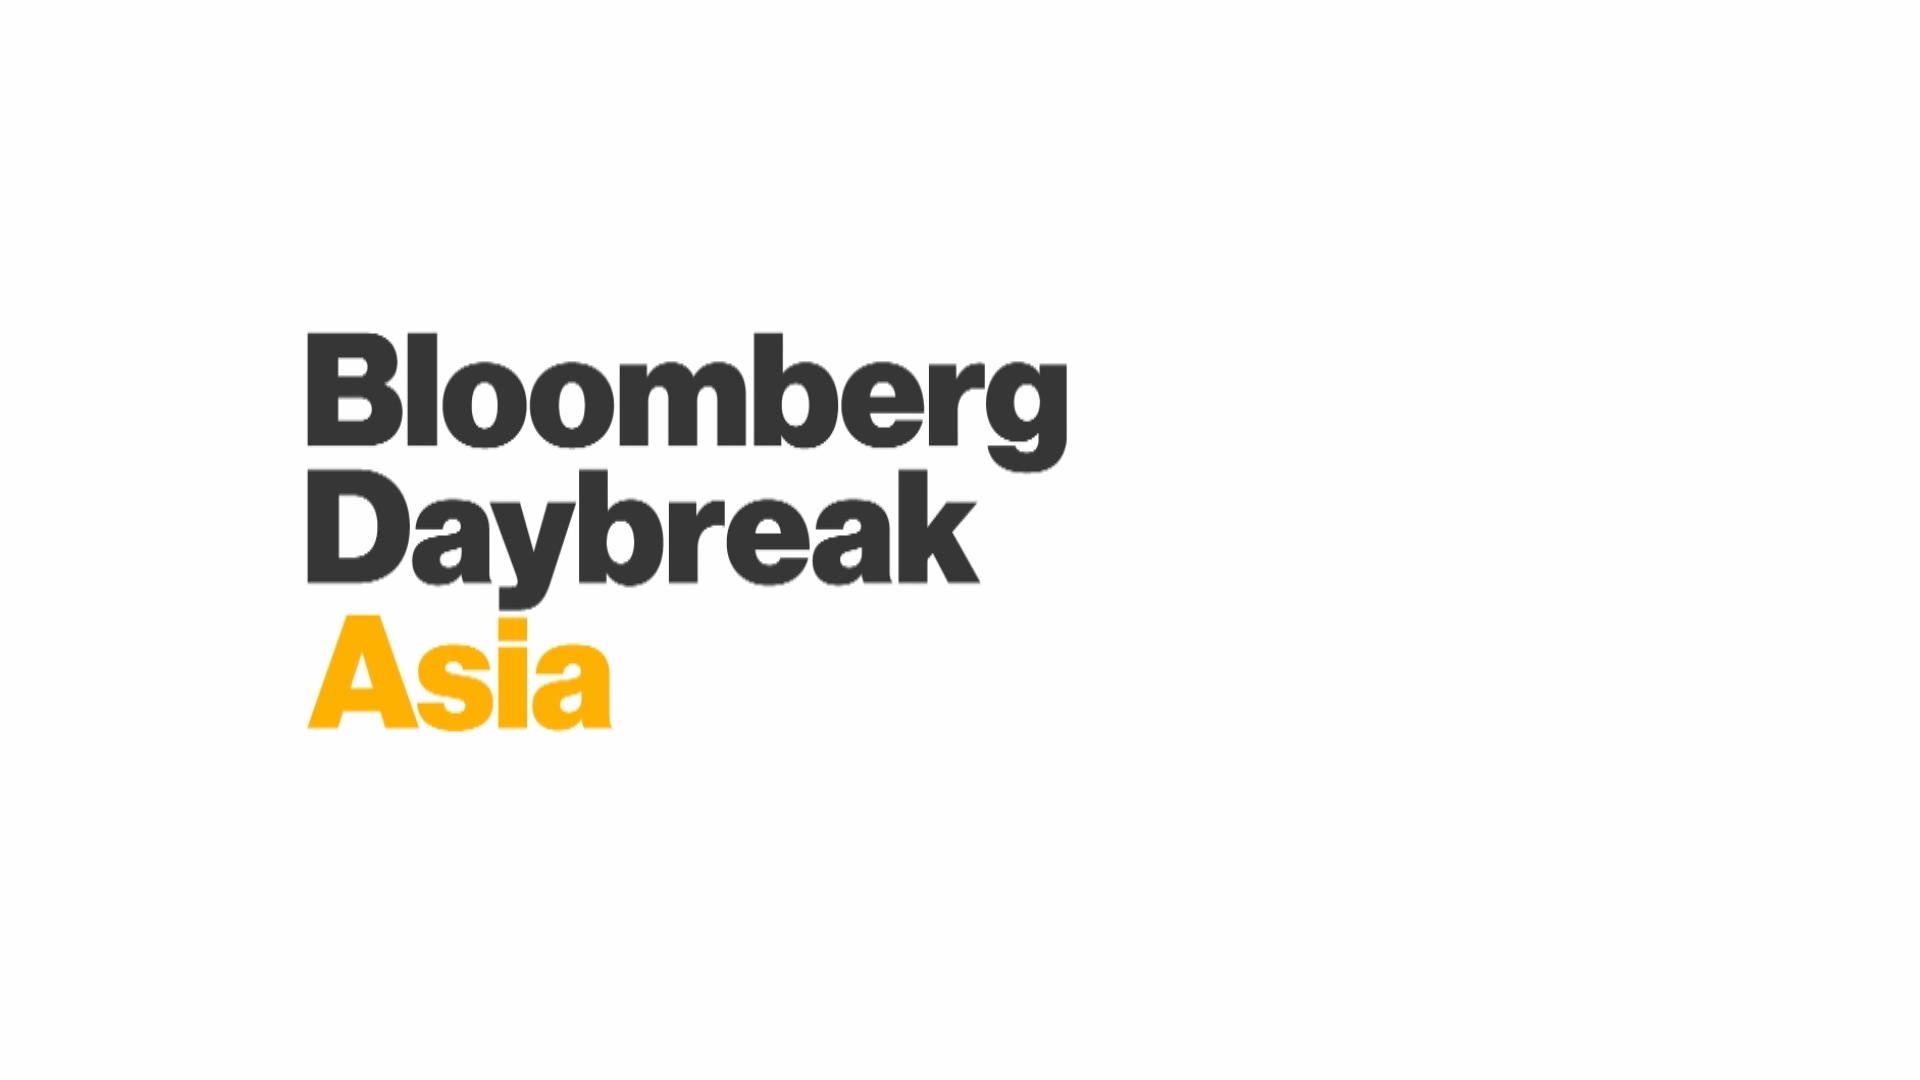 Tiffany Shareholders' Approval of LVMH Sale Caps Rocky Saga - Bloomberg